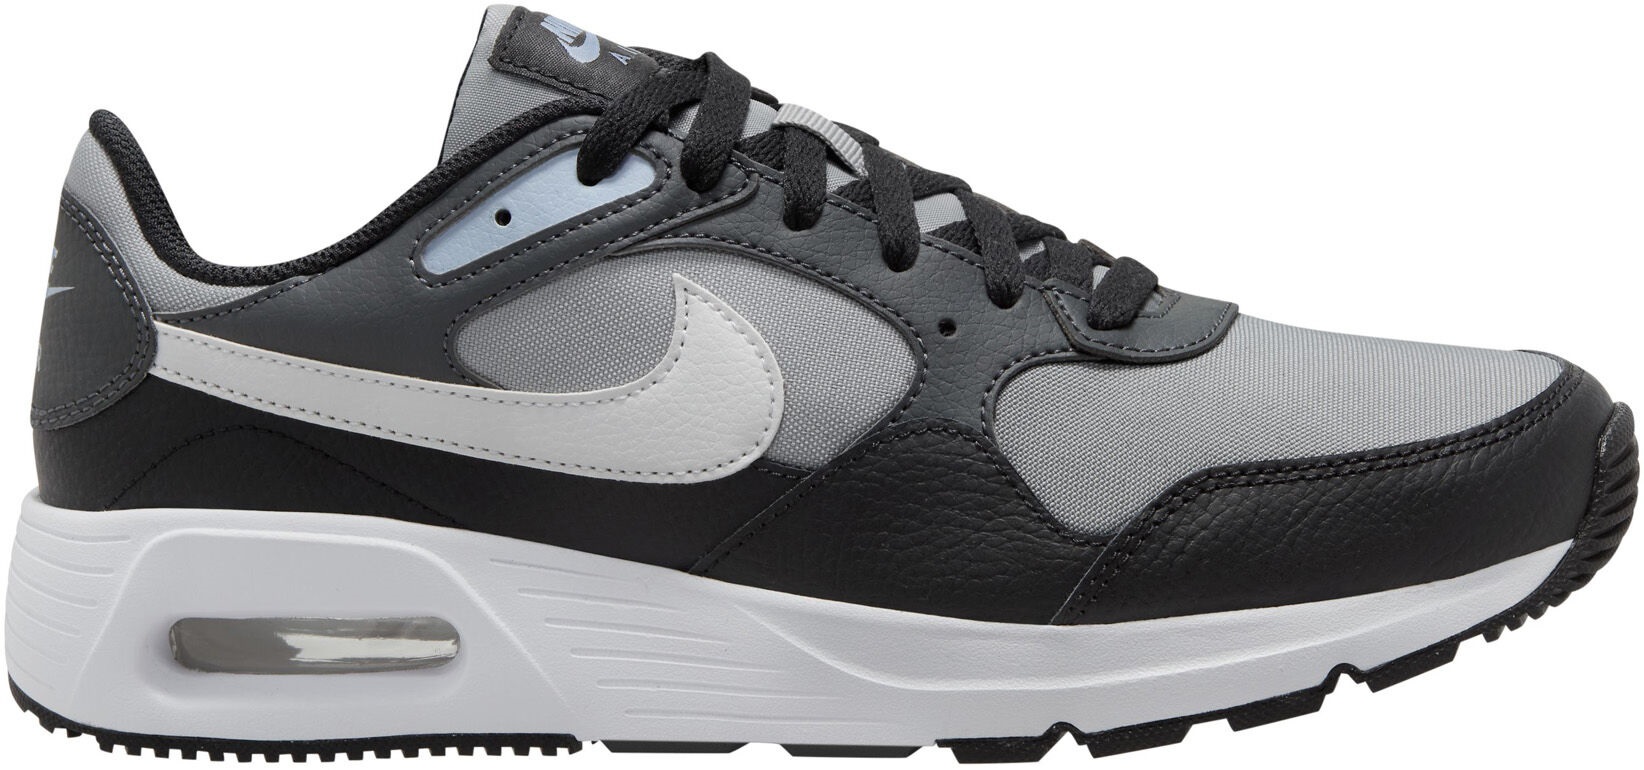 Nike Nike air max sc men's shoes CW4555-013 013 b